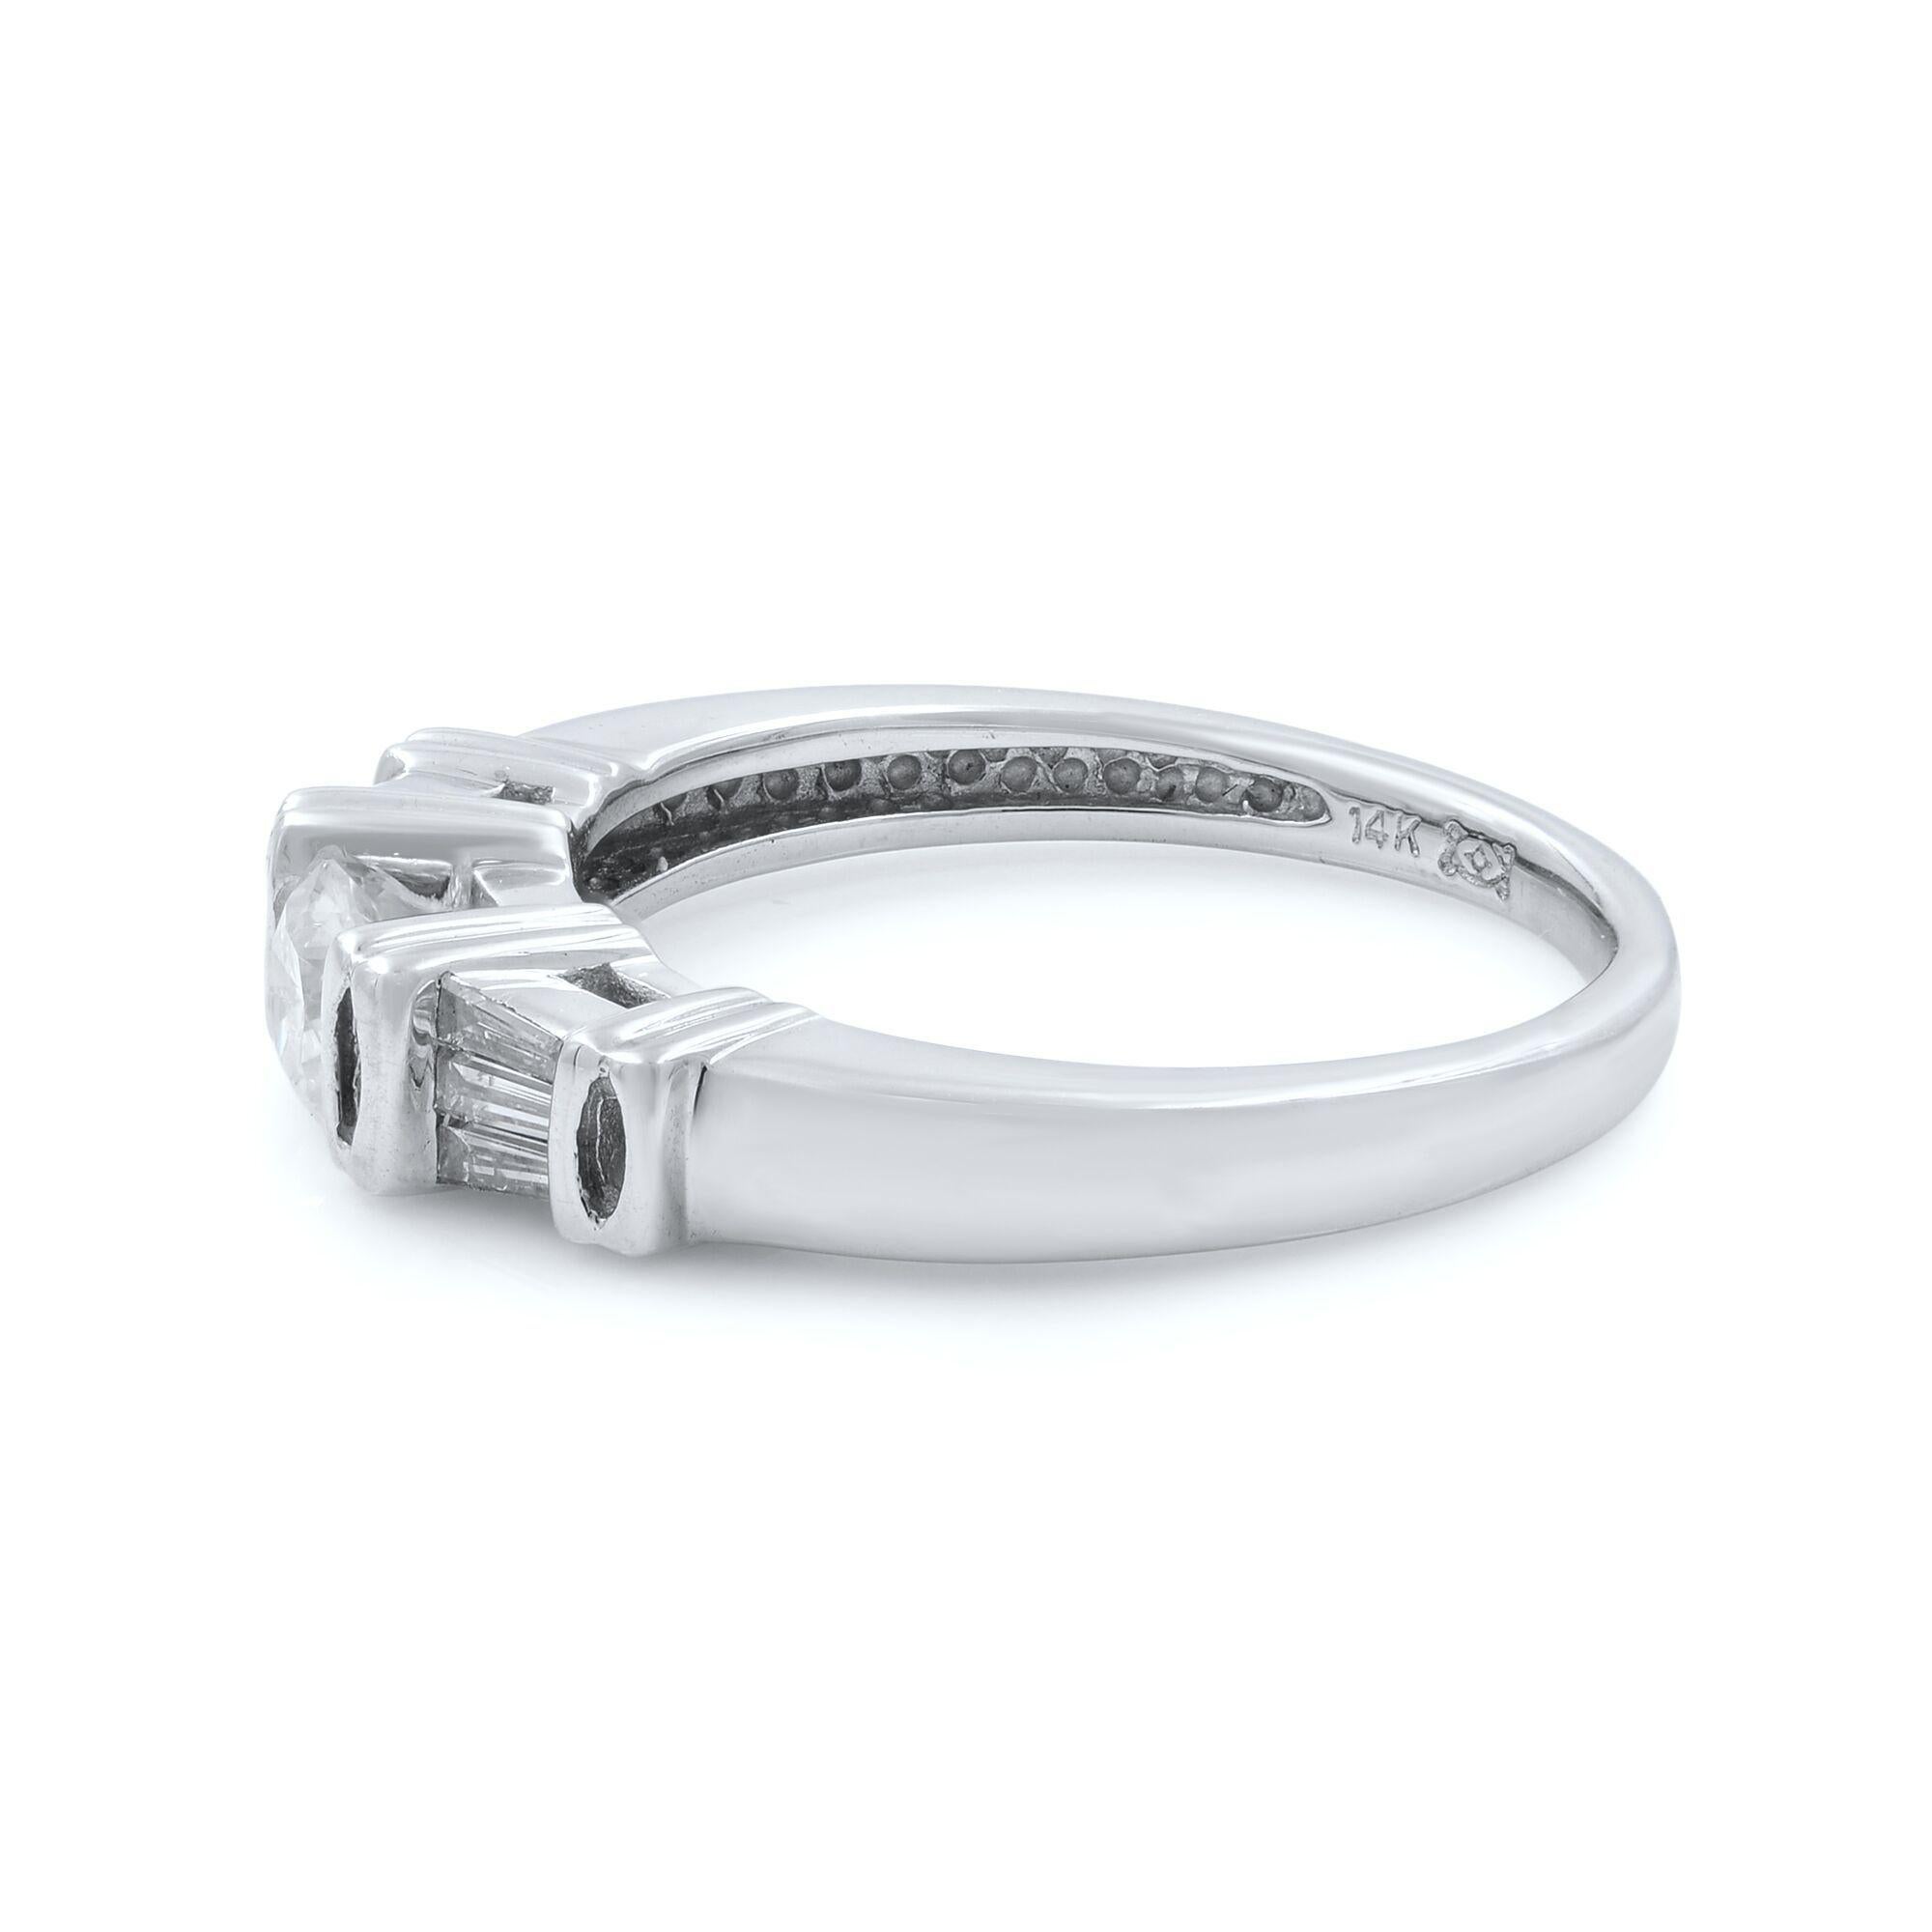 Round Cut Rahel Koen Diamond Engagement Ring 14K White Gold 1.00 Cttw For Sale